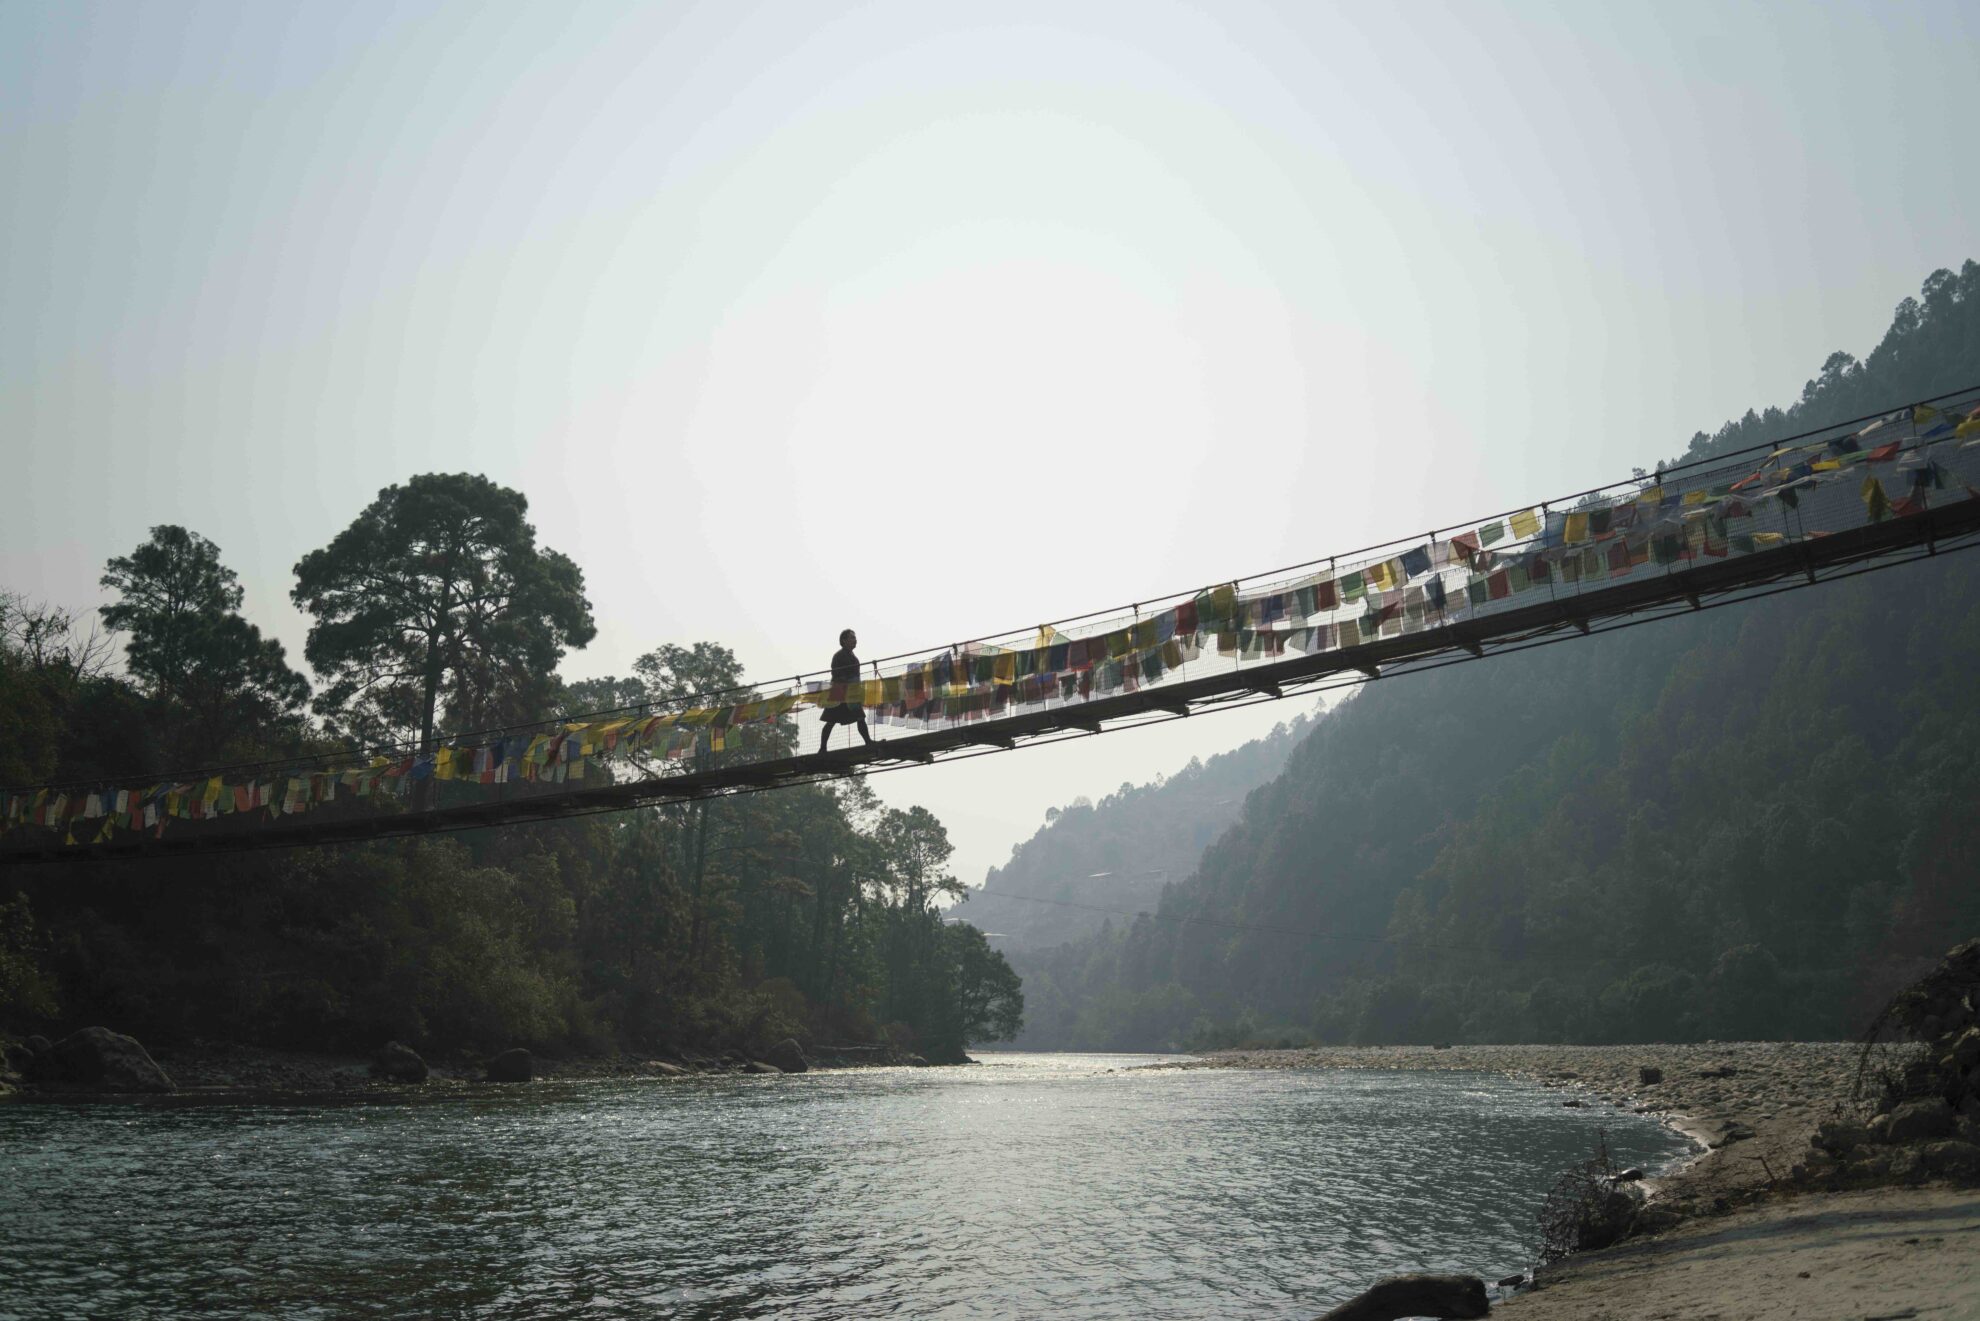 Amankora, Bhoutan - Punakha lodge, Mo Chhu River lodge .pont suspendu